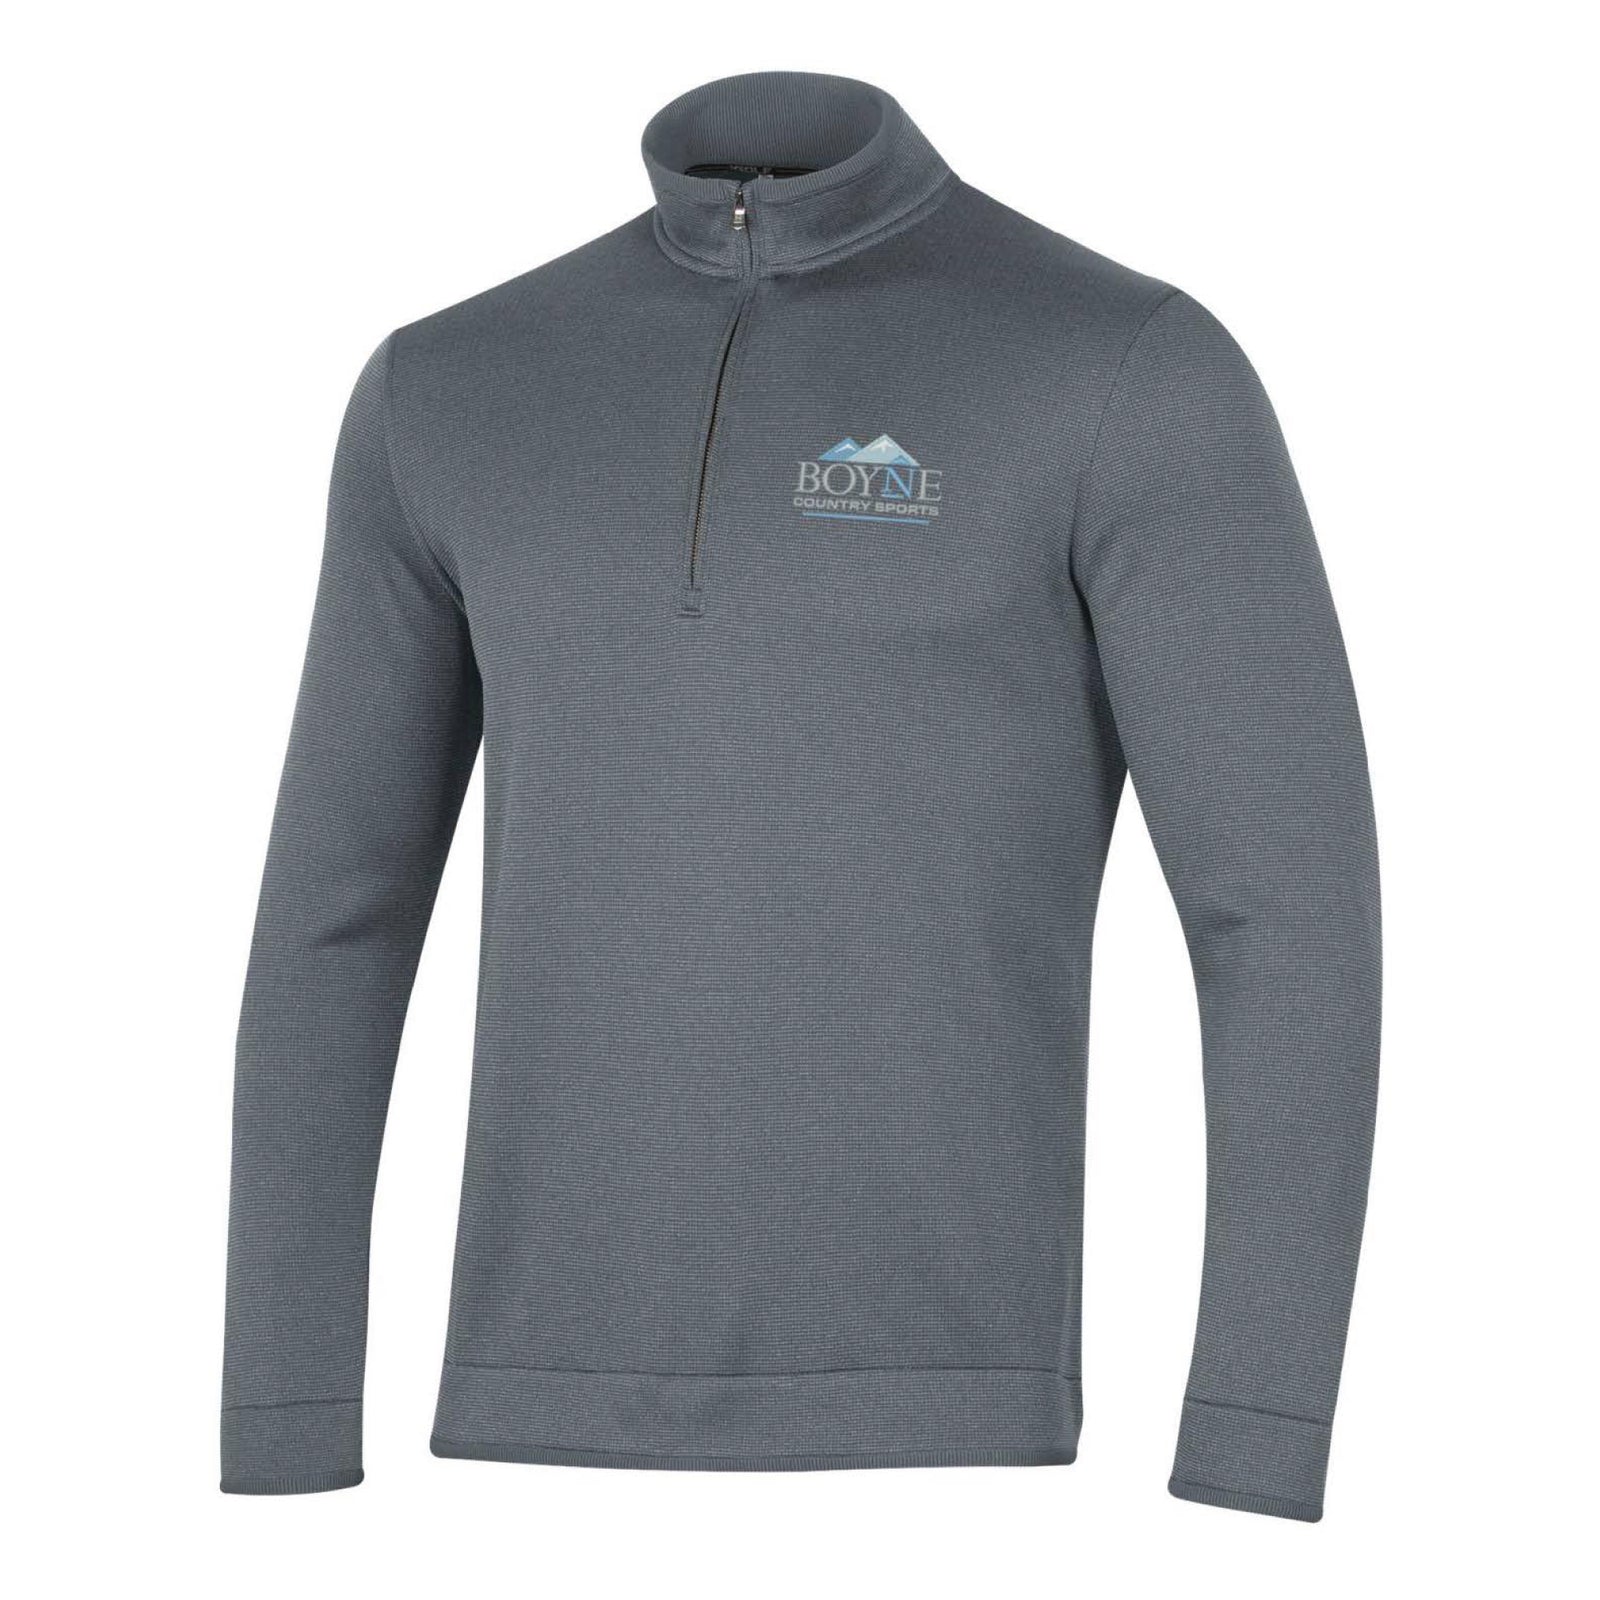 Boyne Country Sports Men's Speck 1/4-Zip Under Armour Sweater Fleece MEDIUM